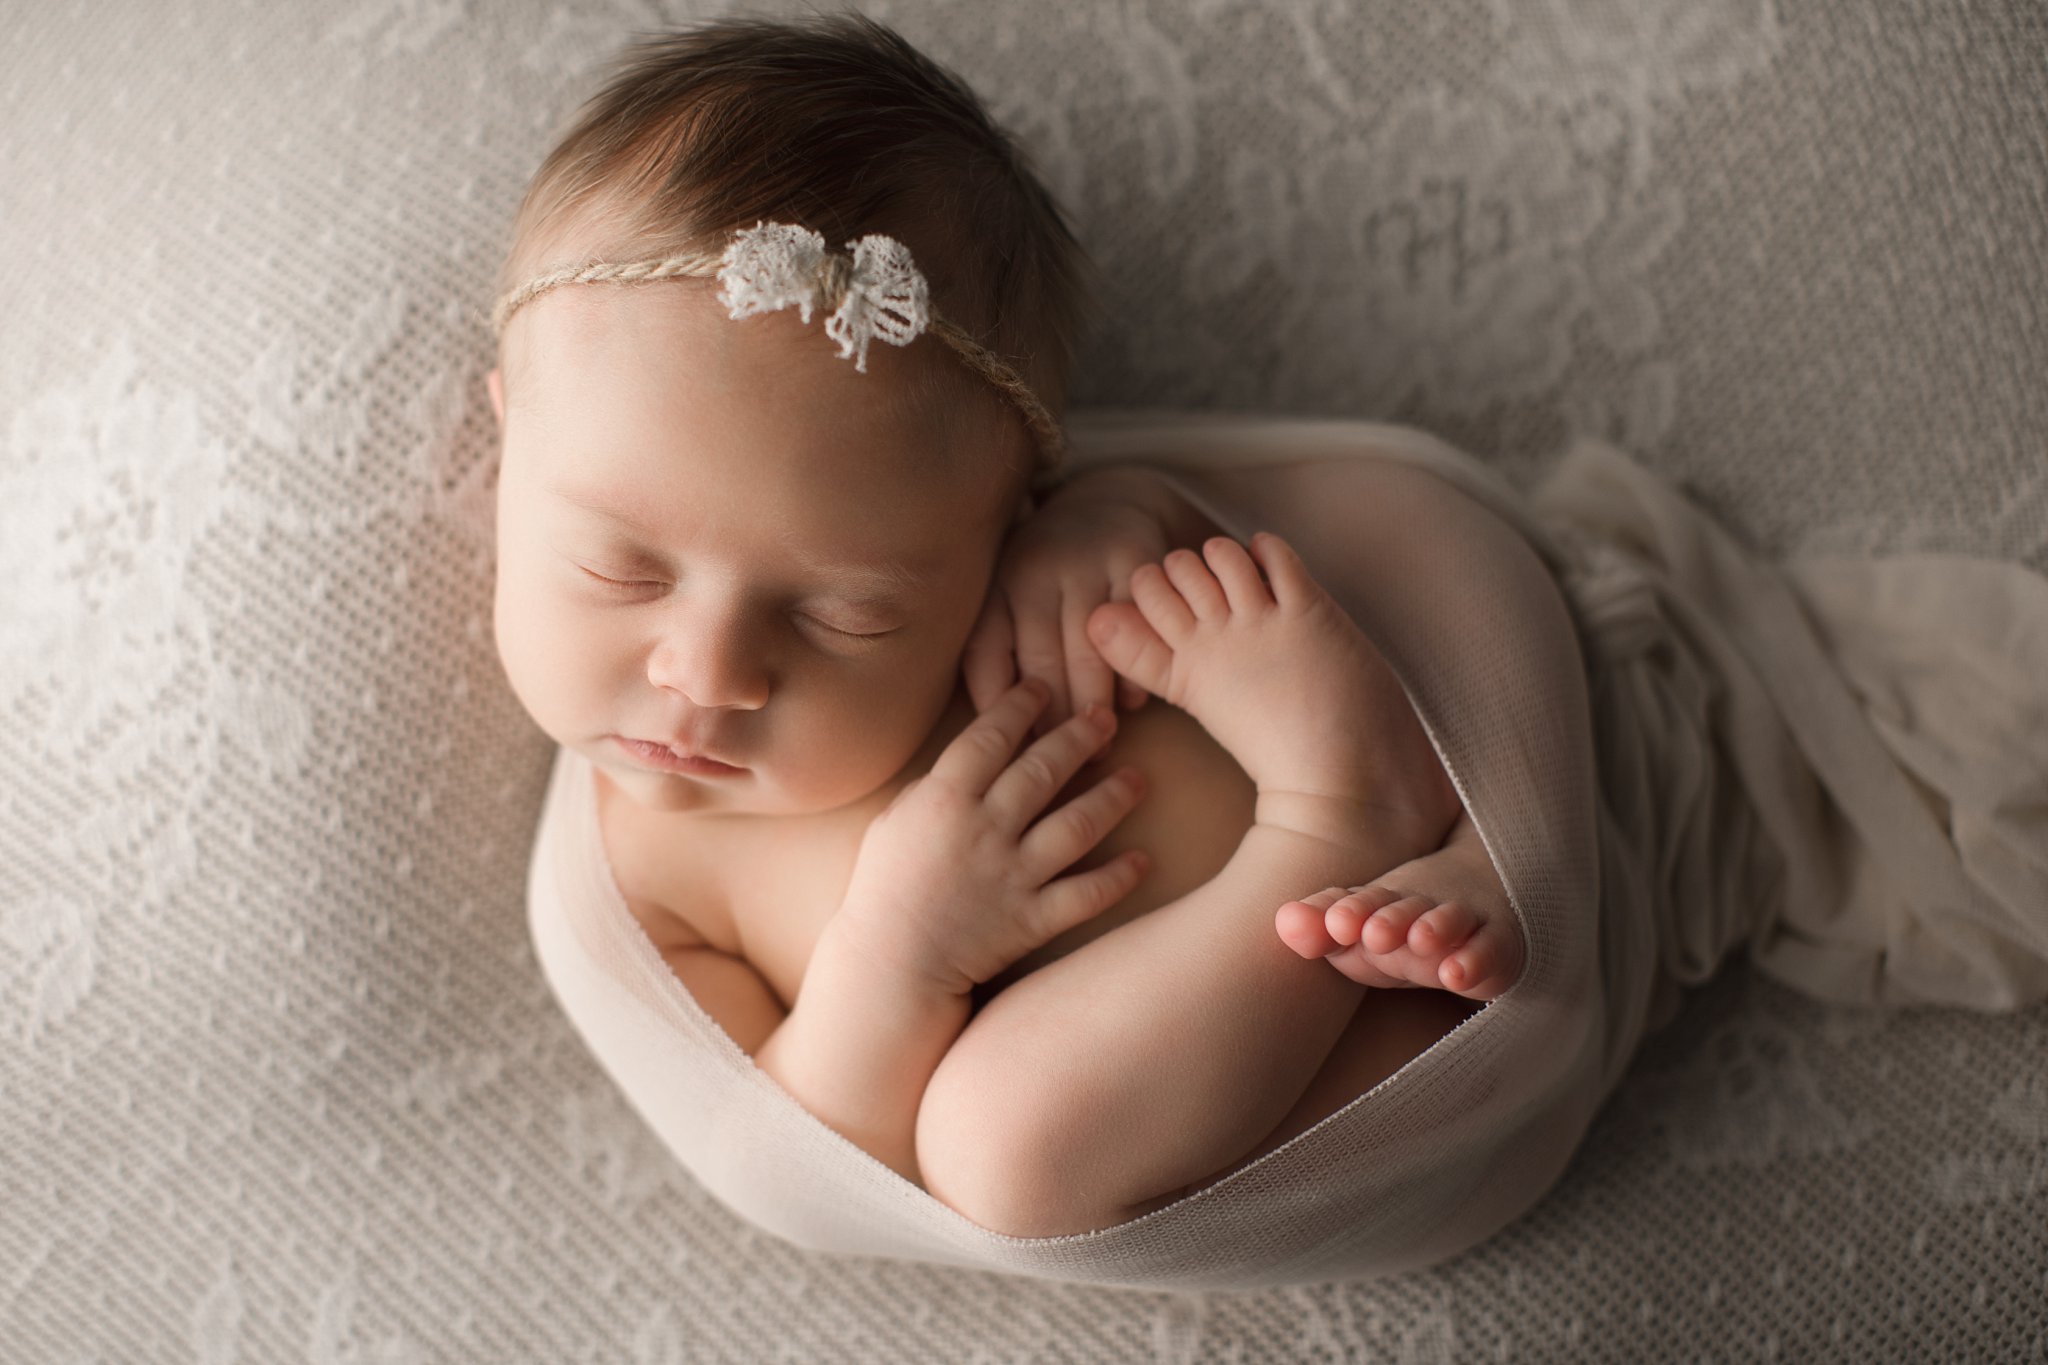 newborn baby girl sleeping on cream lace blanket